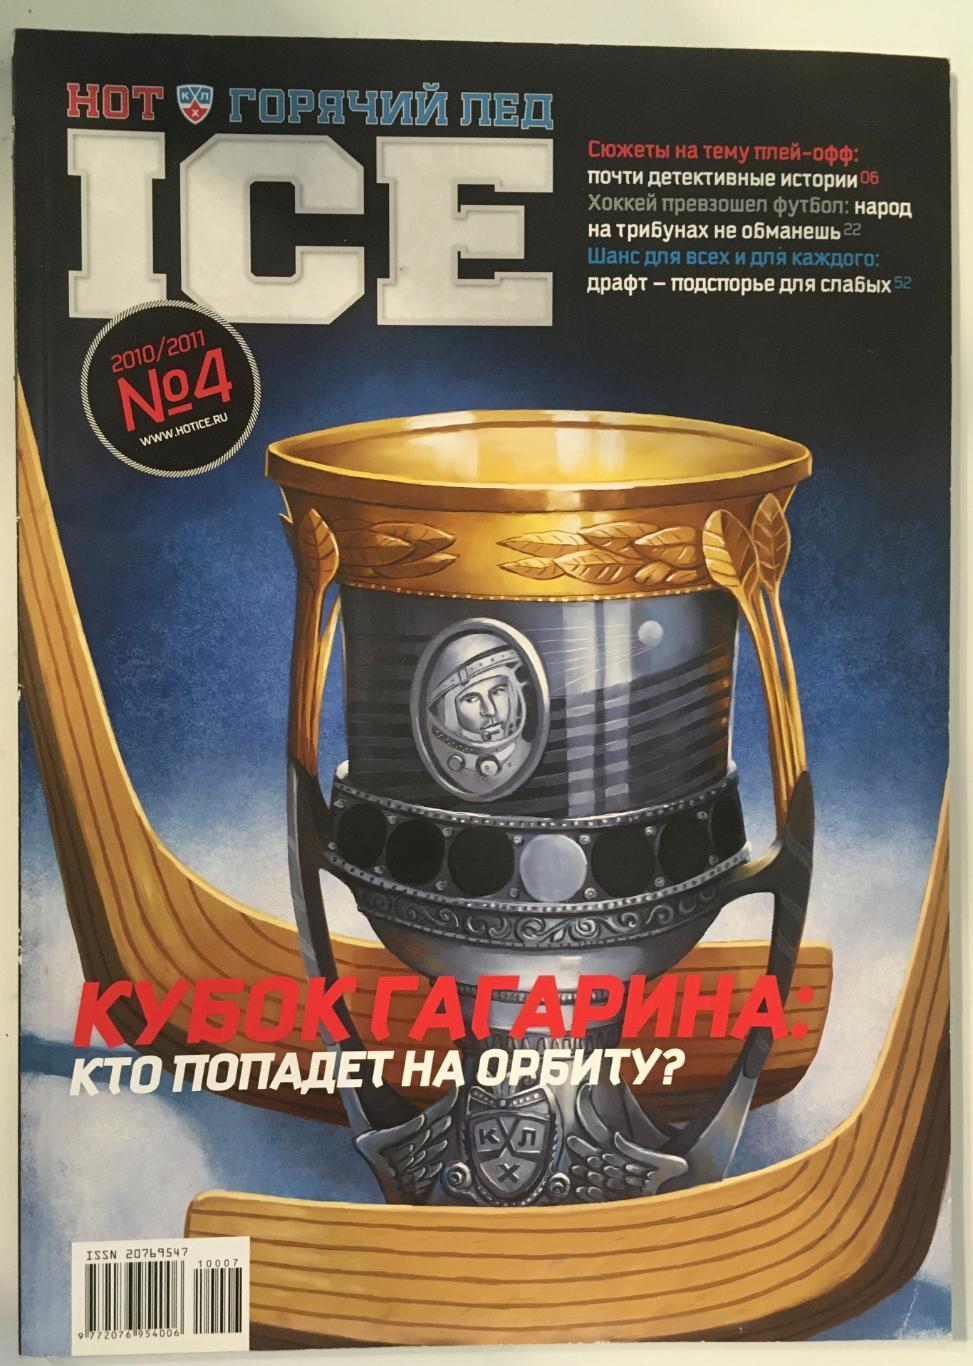 Горячий лед № 4 сезон 2010 - 2011 , Кубок Гагарина : Кто попадет на орбиту?